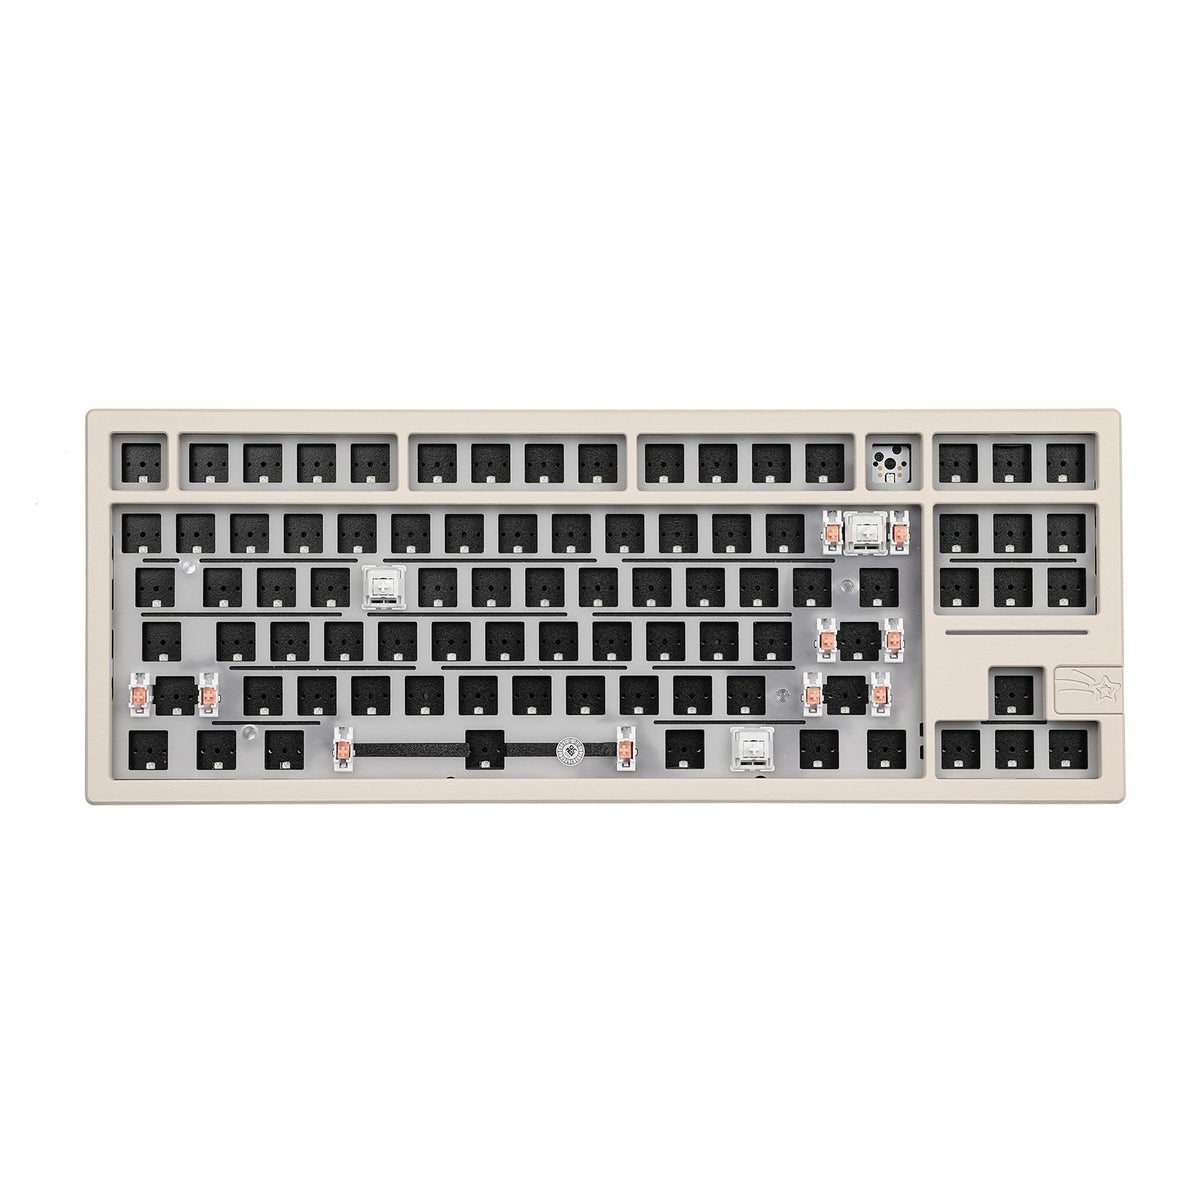 VTER Galaxy80 Pro Alummium Mechanical Keyboard